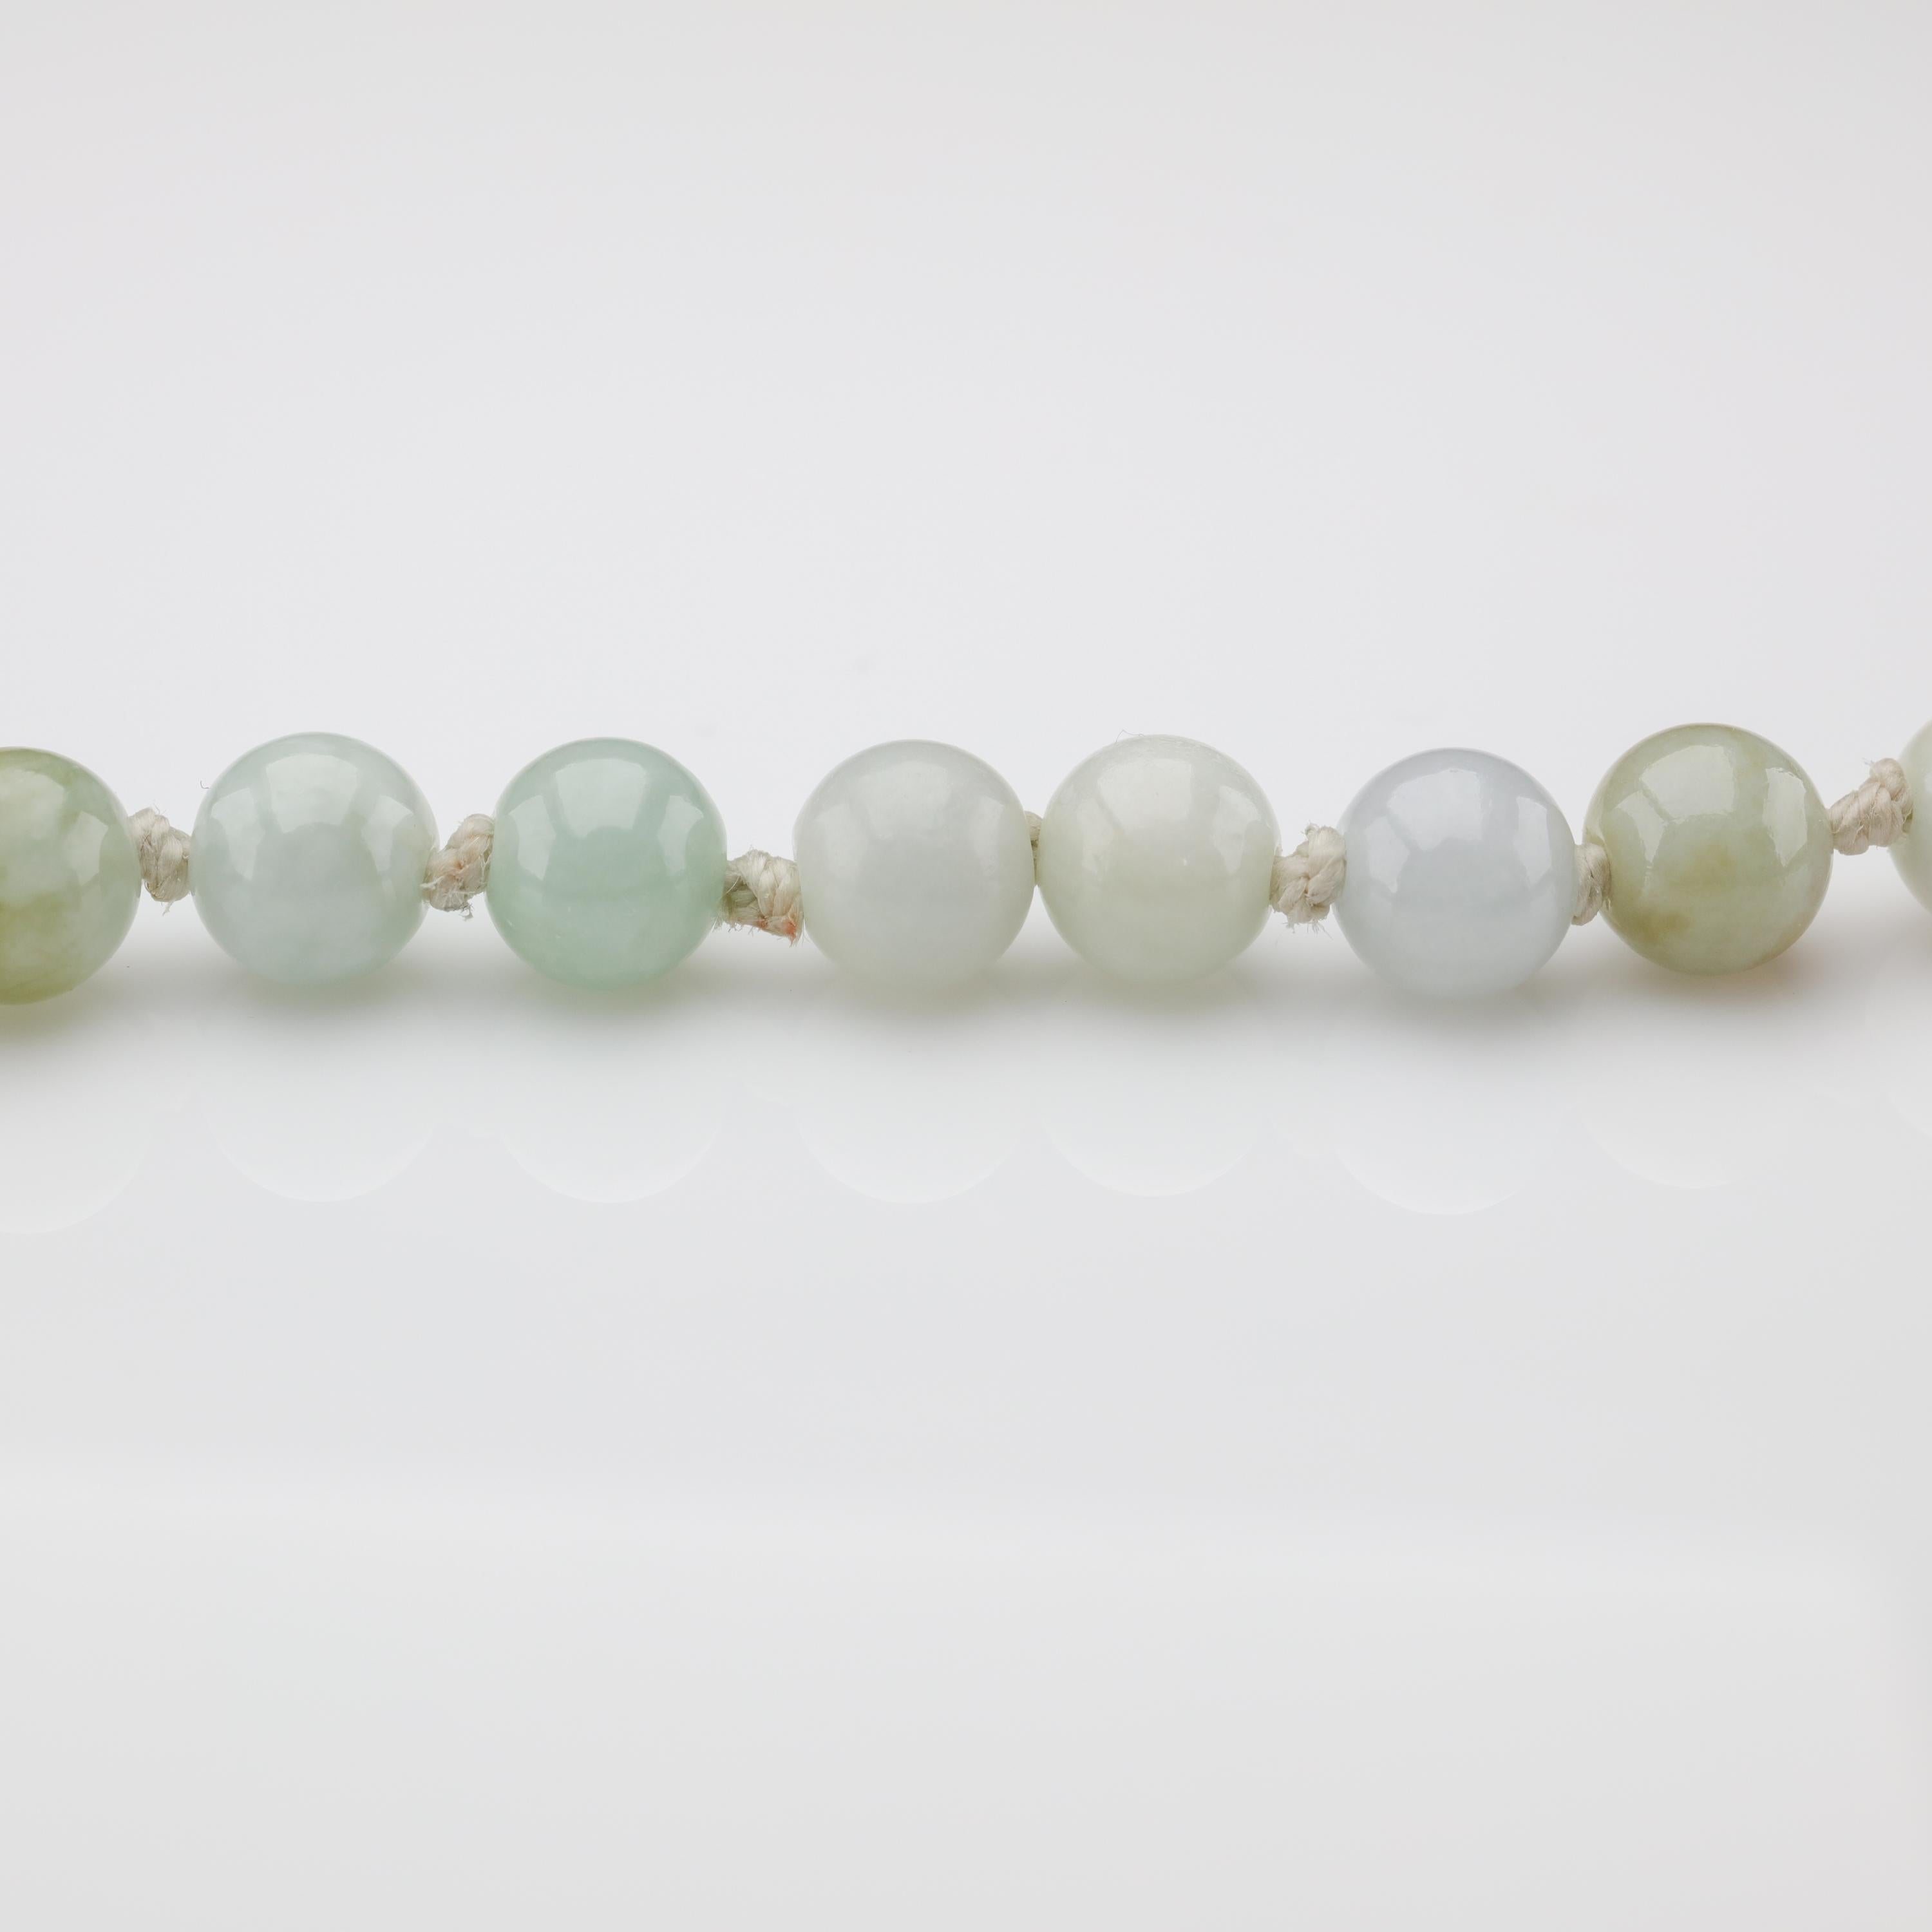 Antique Jade Necklace in Faint, Breathtaking Colors 7